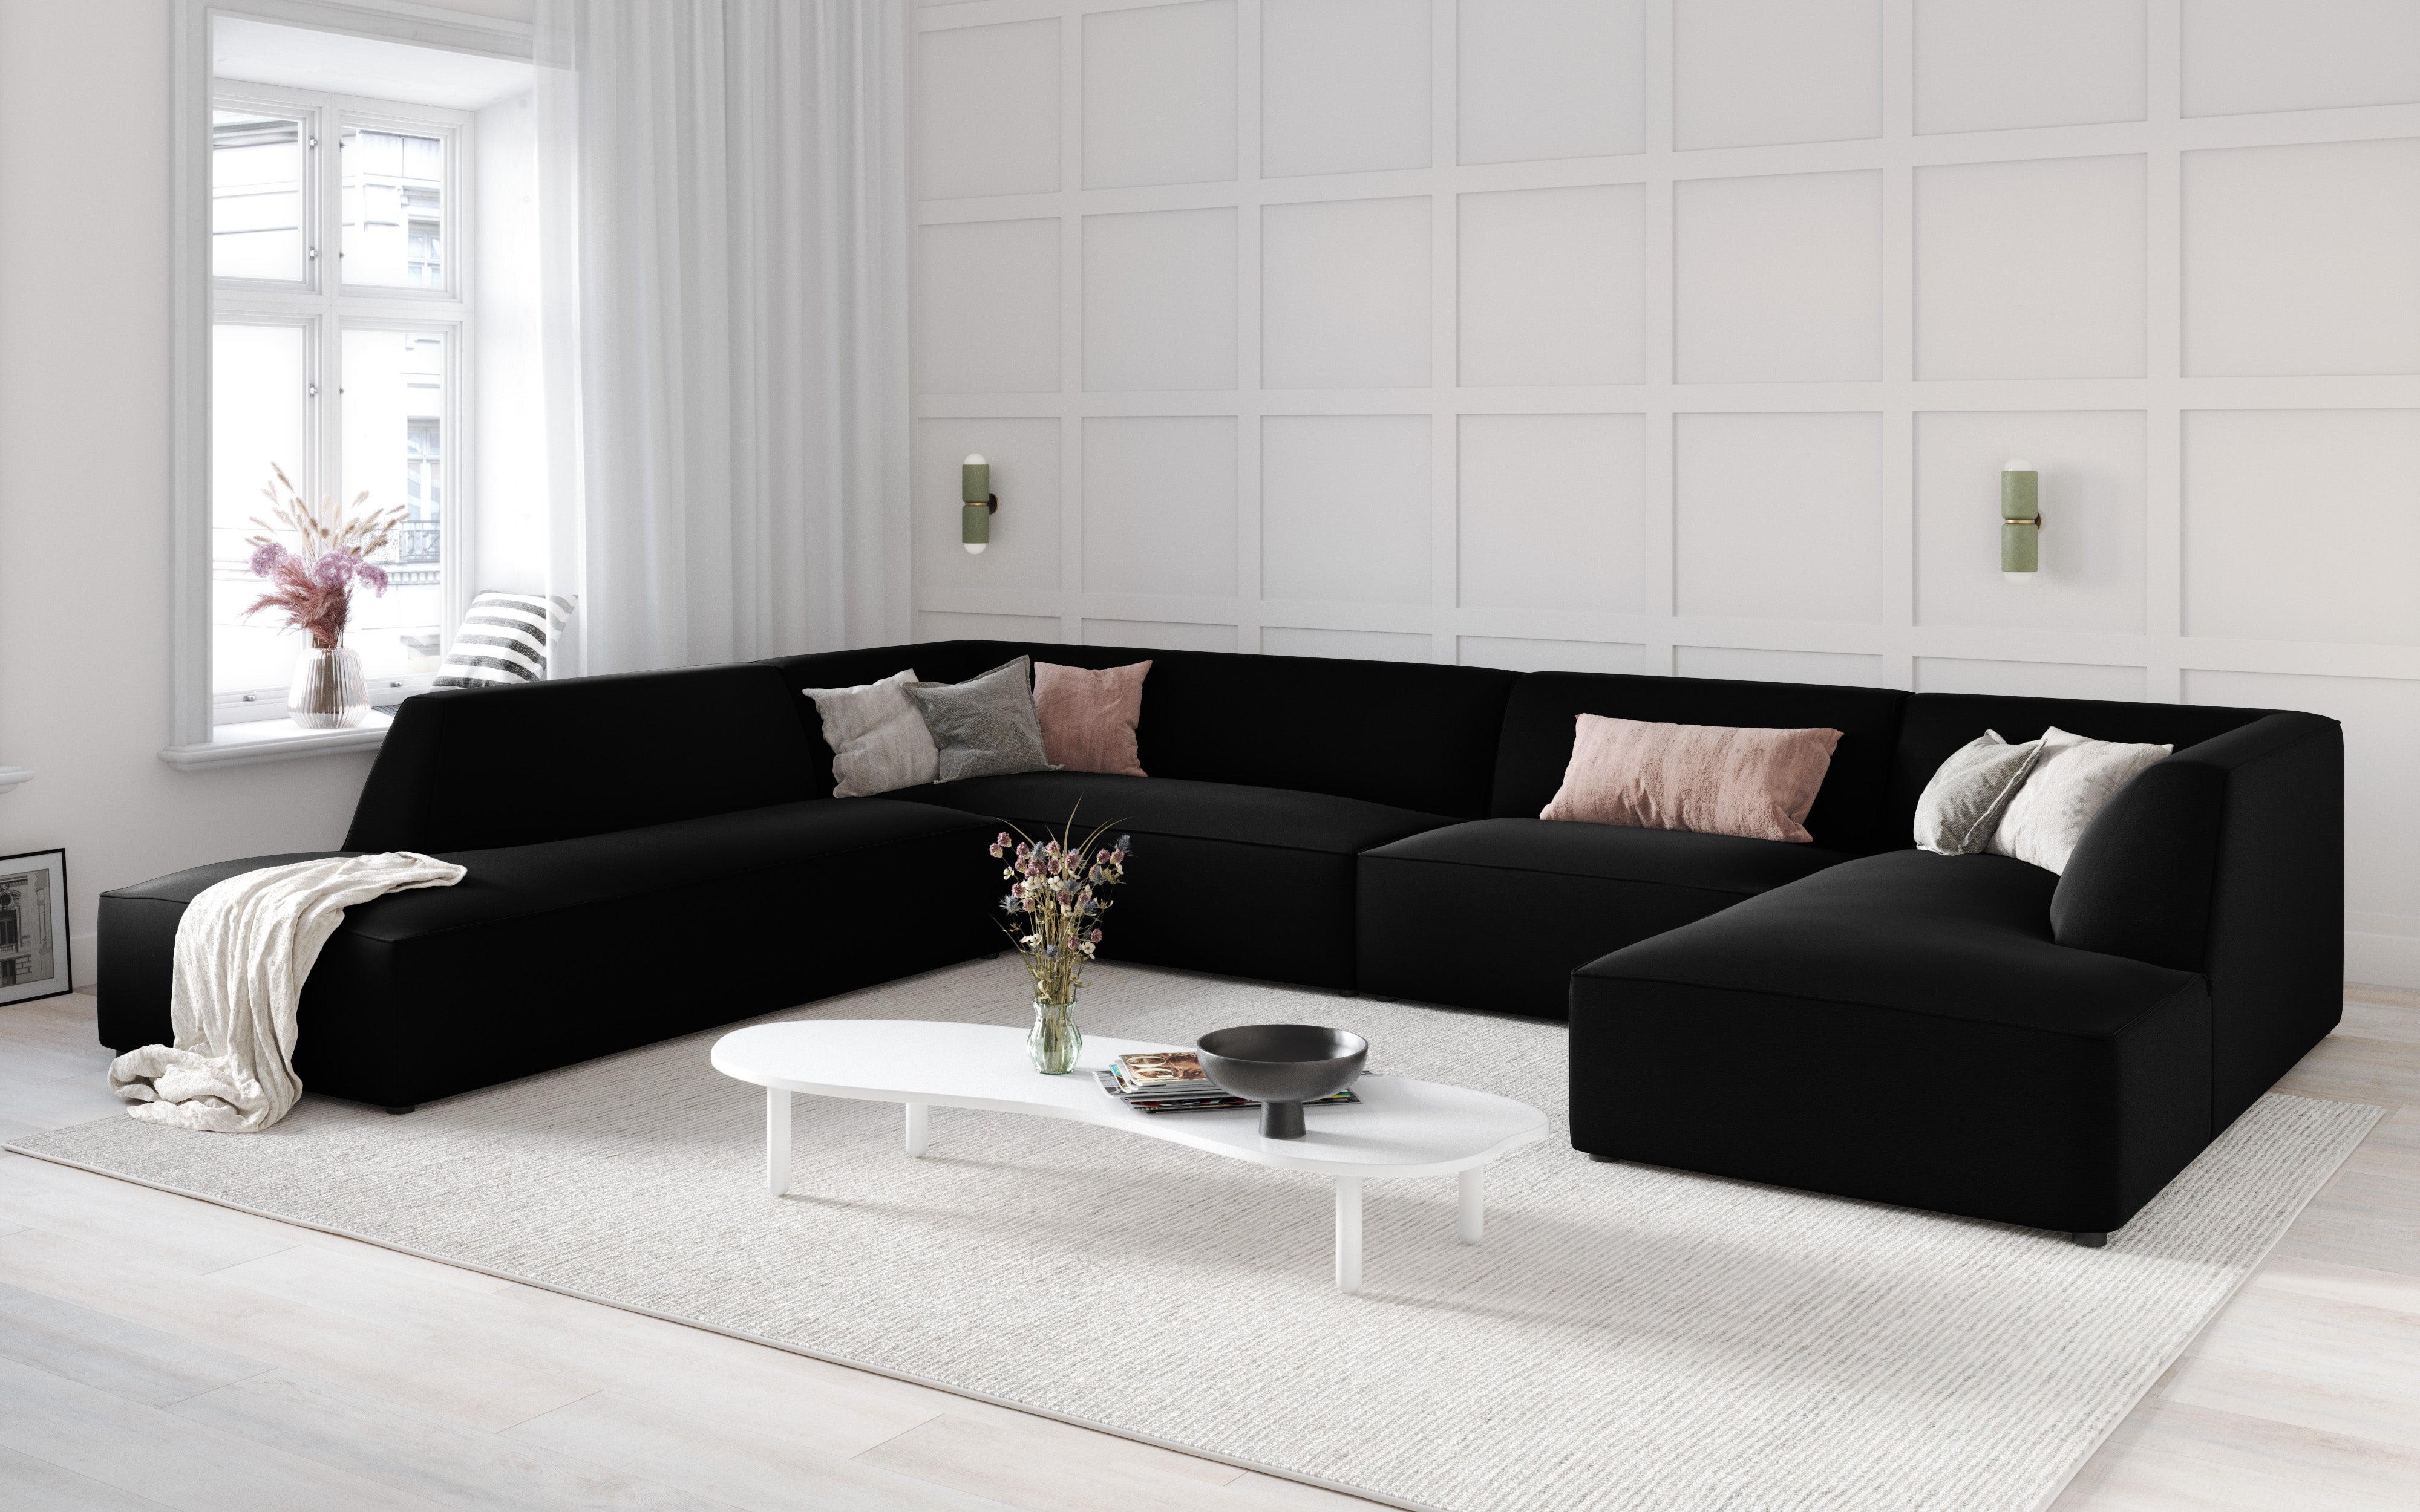 Black corner for a minimalist interior